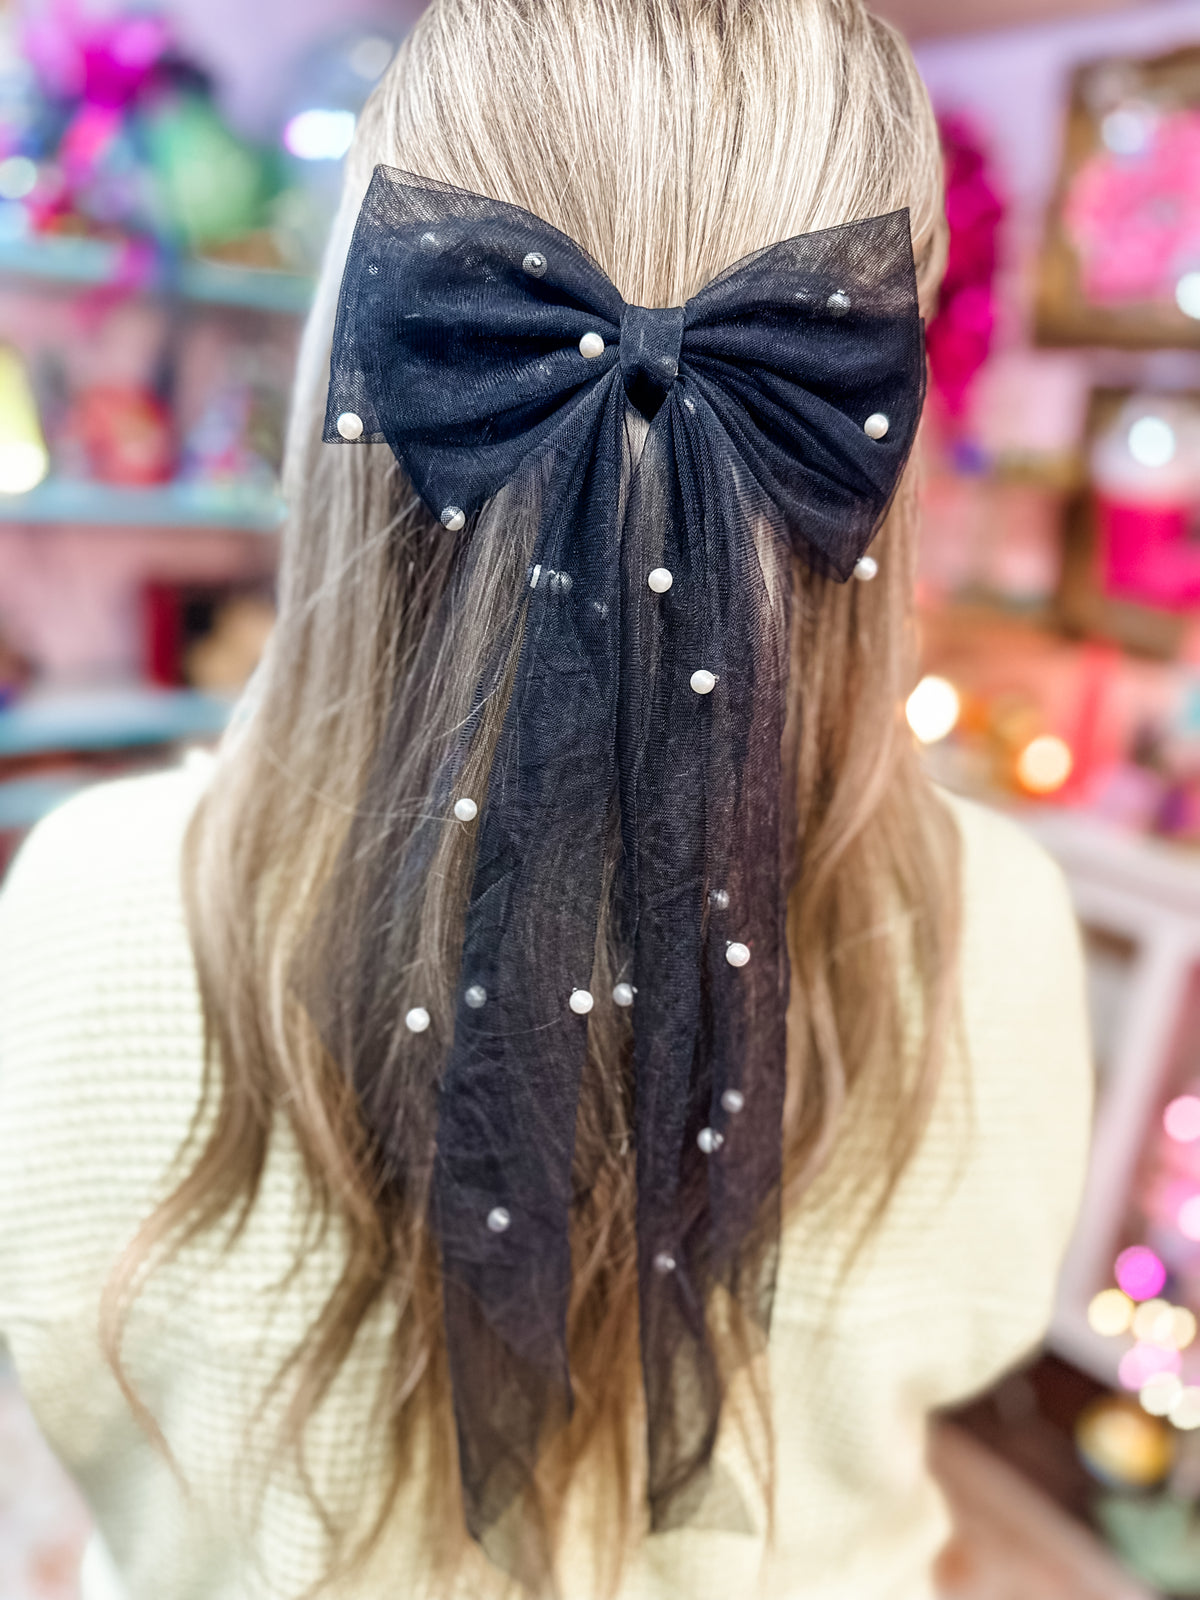 IWOWHERO 20pcs floral bow hairclips hair bows for girls 4-6 Baby Girl Hair  Accessories girls bows and hair accessories flower bow hair clips flash